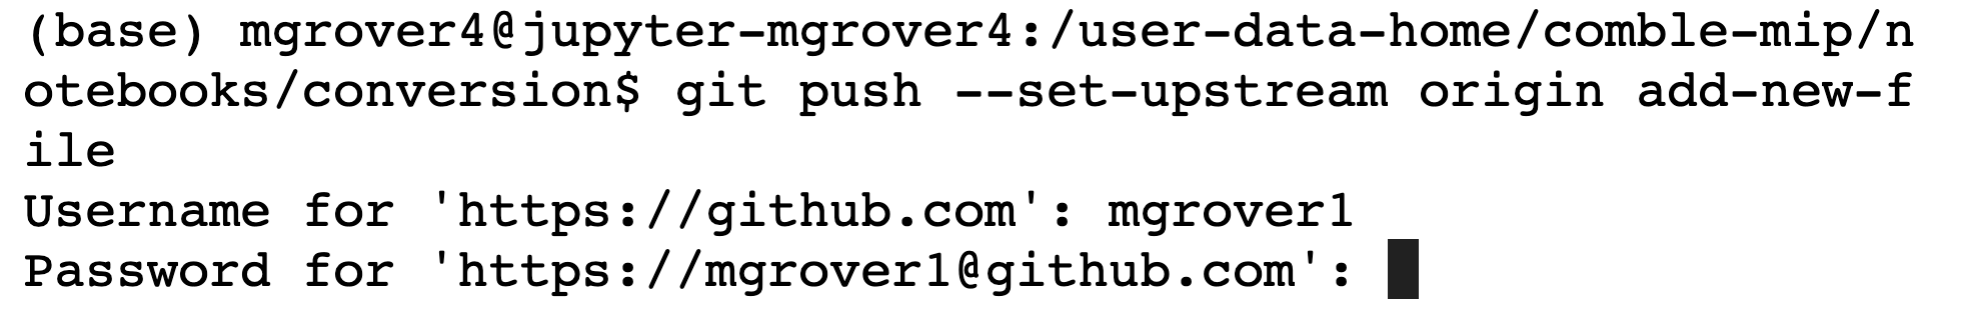 Git push username